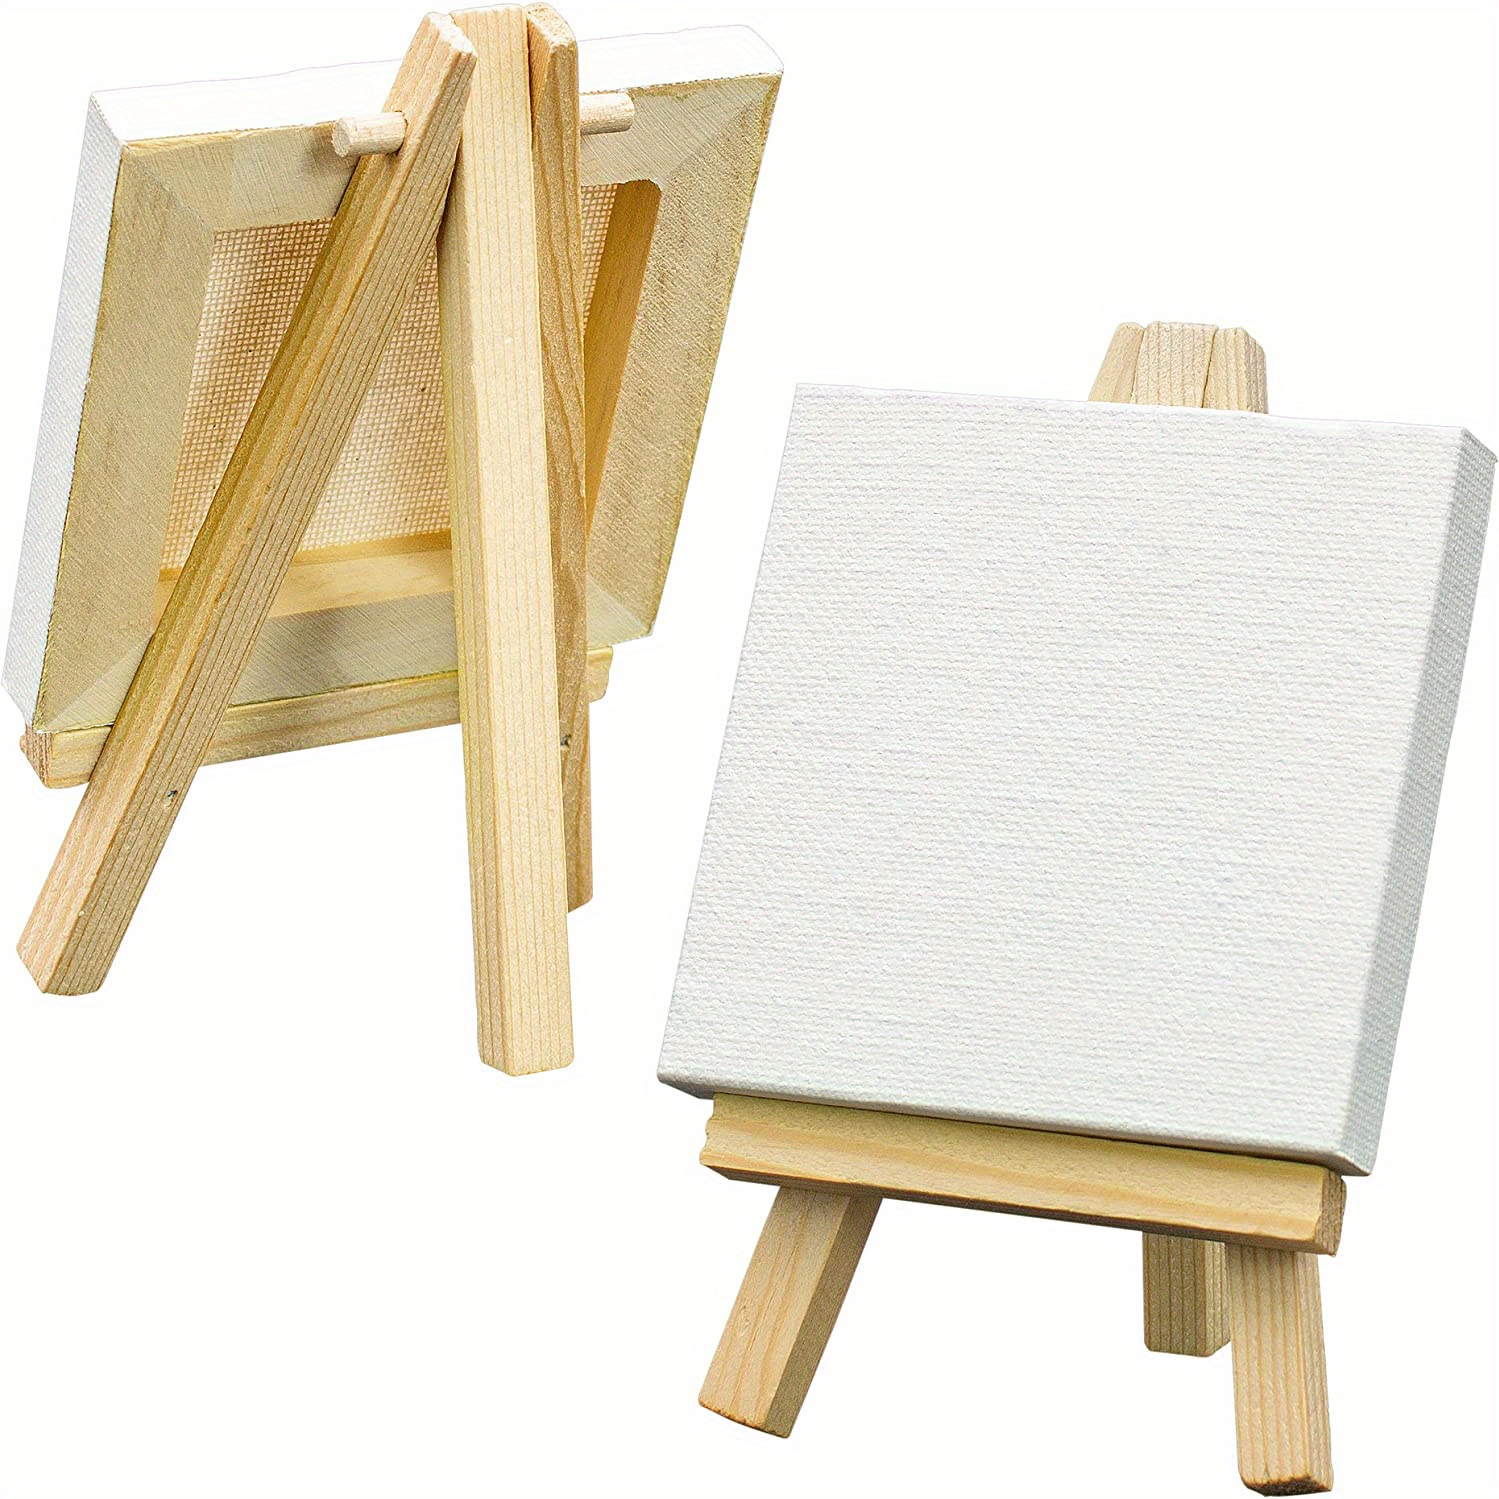 Caballetes de madera o tableros de pintura con lienzo blanco